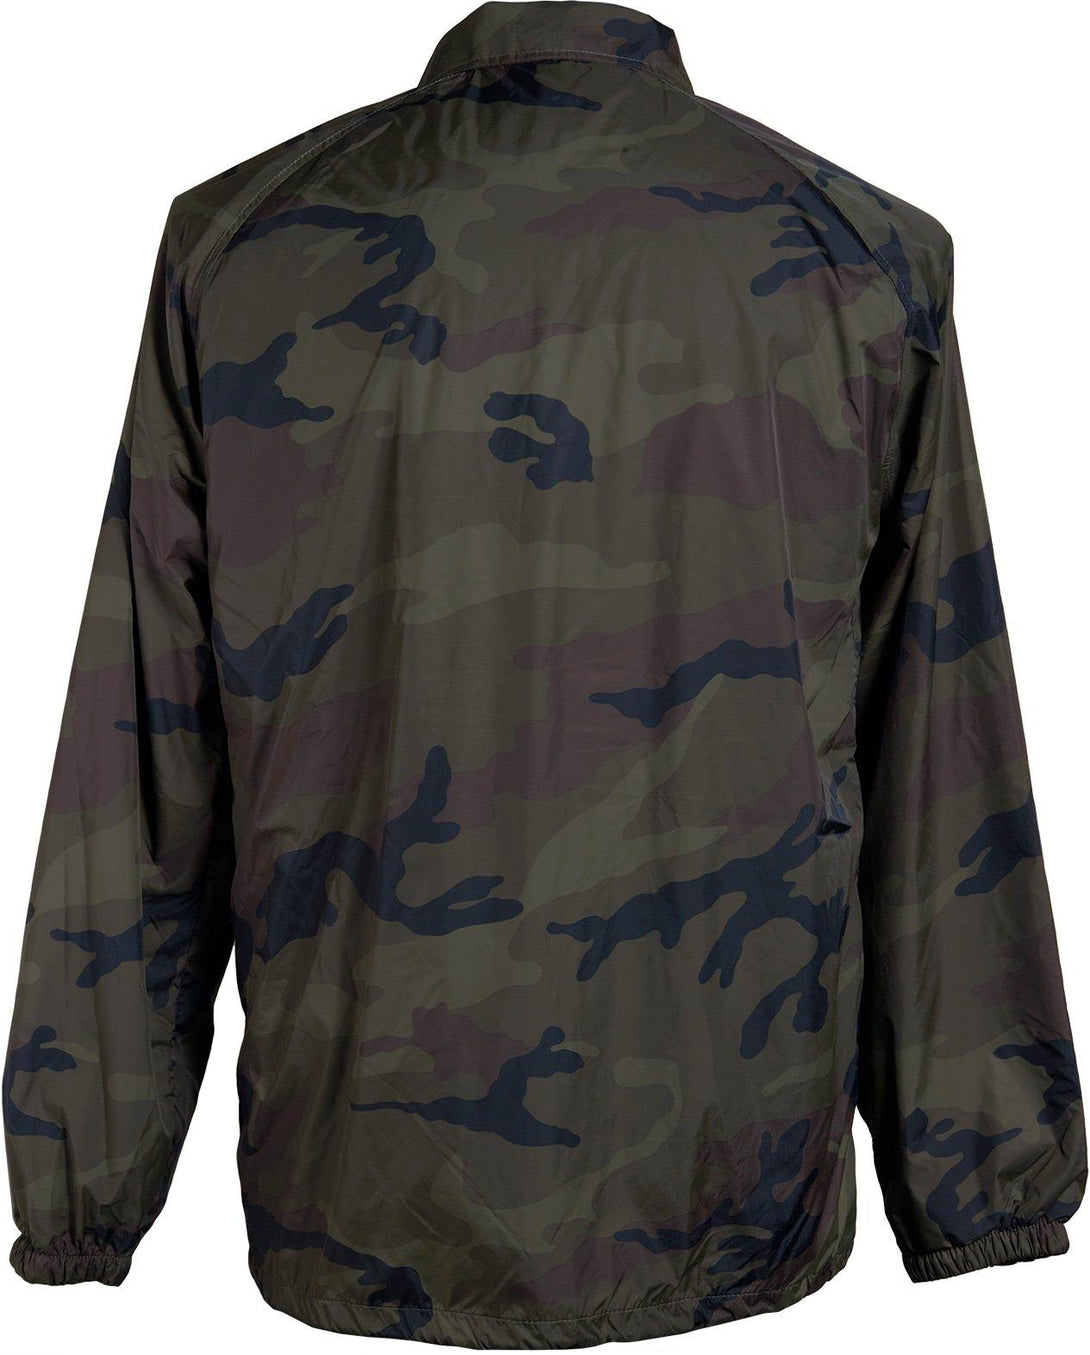 Boxed fishing windbreaker camo jacket back